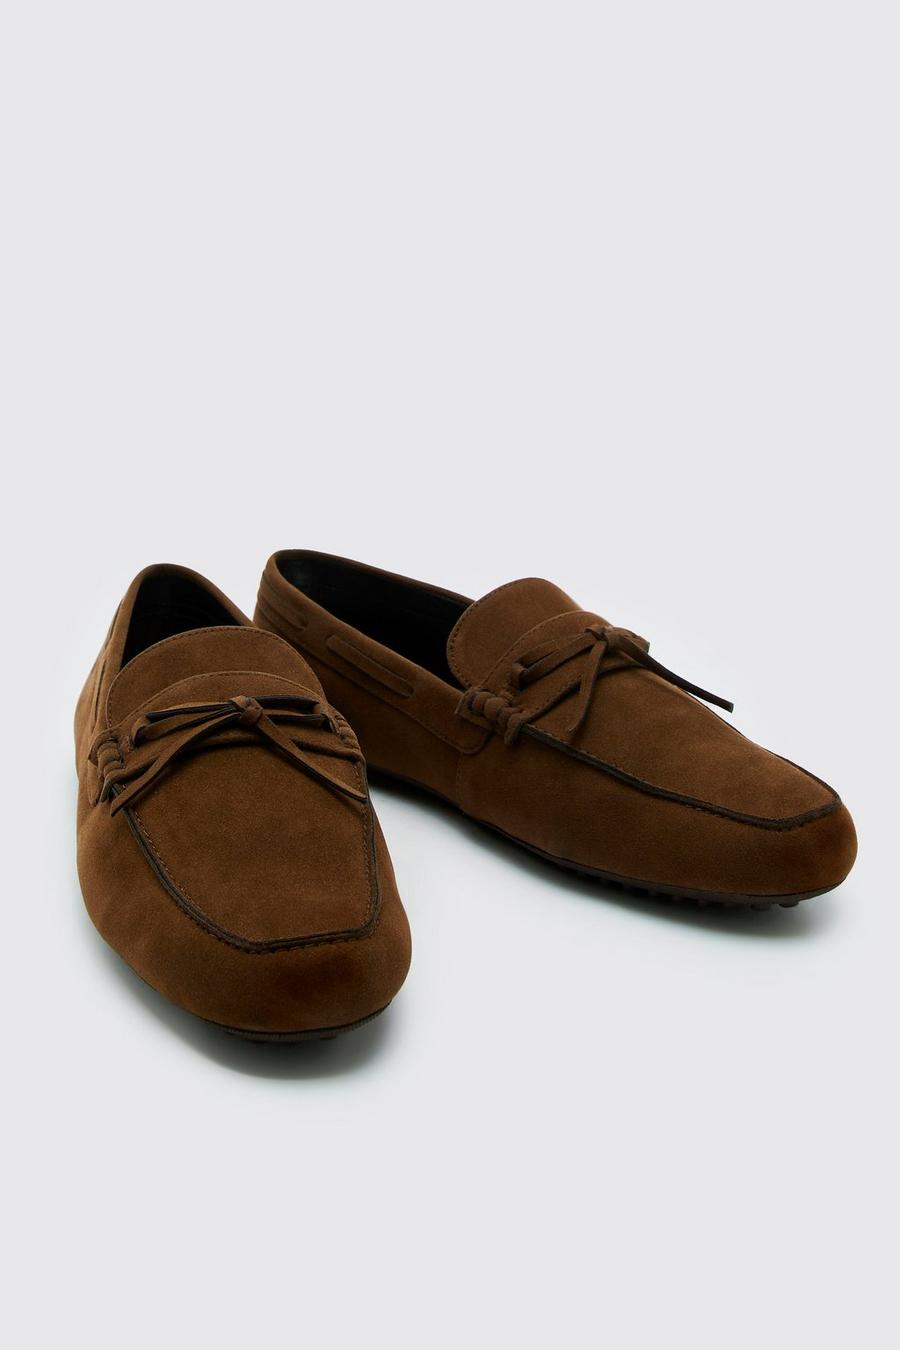 Chaussures en faux daim, Chocolate marron